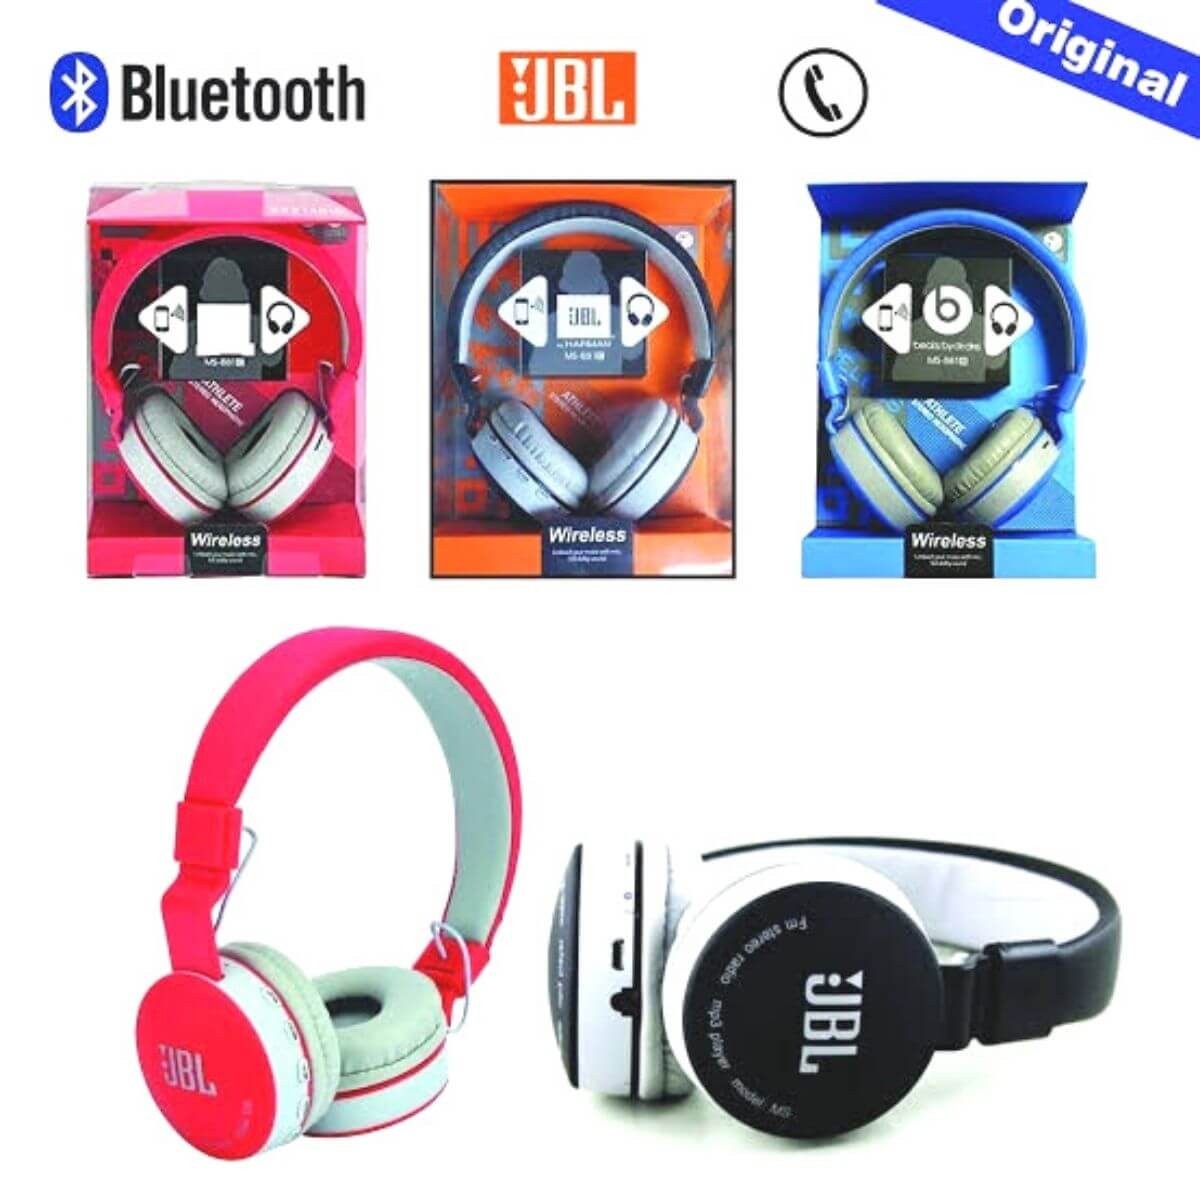 JBL 881 Wireless Headphone BD